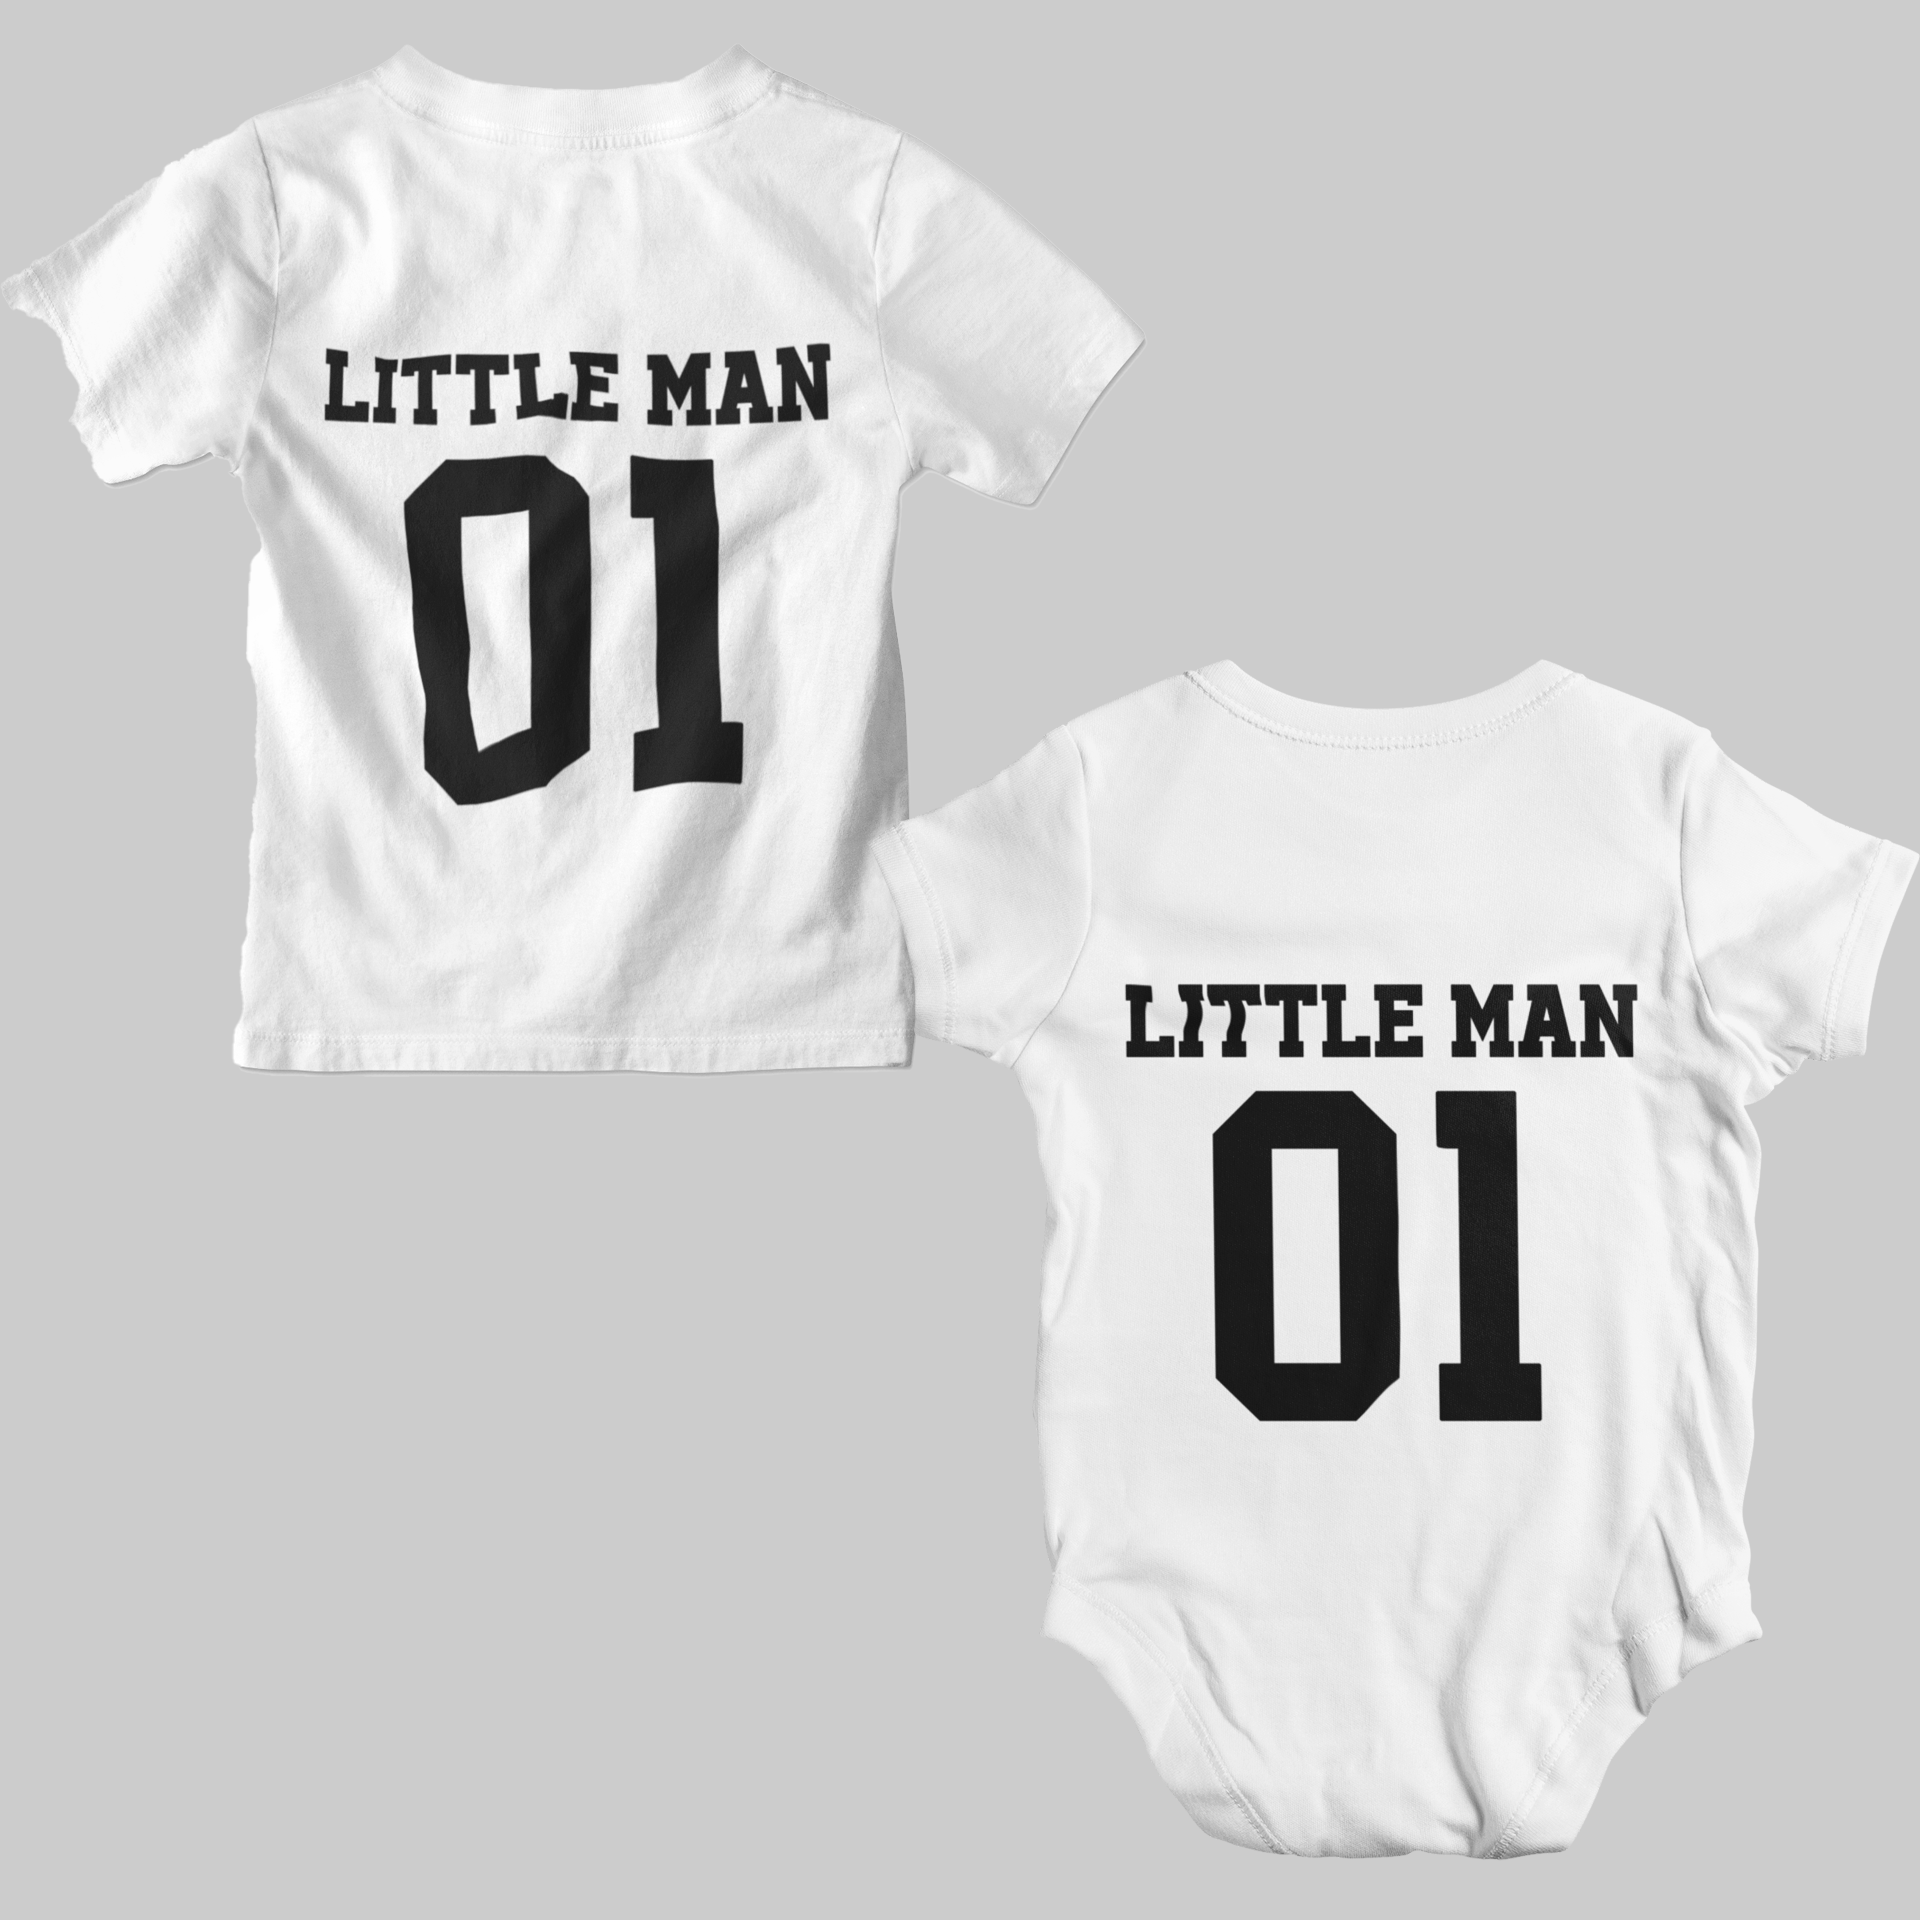 Little Man Big Man White & Black Number Combo - Adult Tshirt + Kids Tshirt